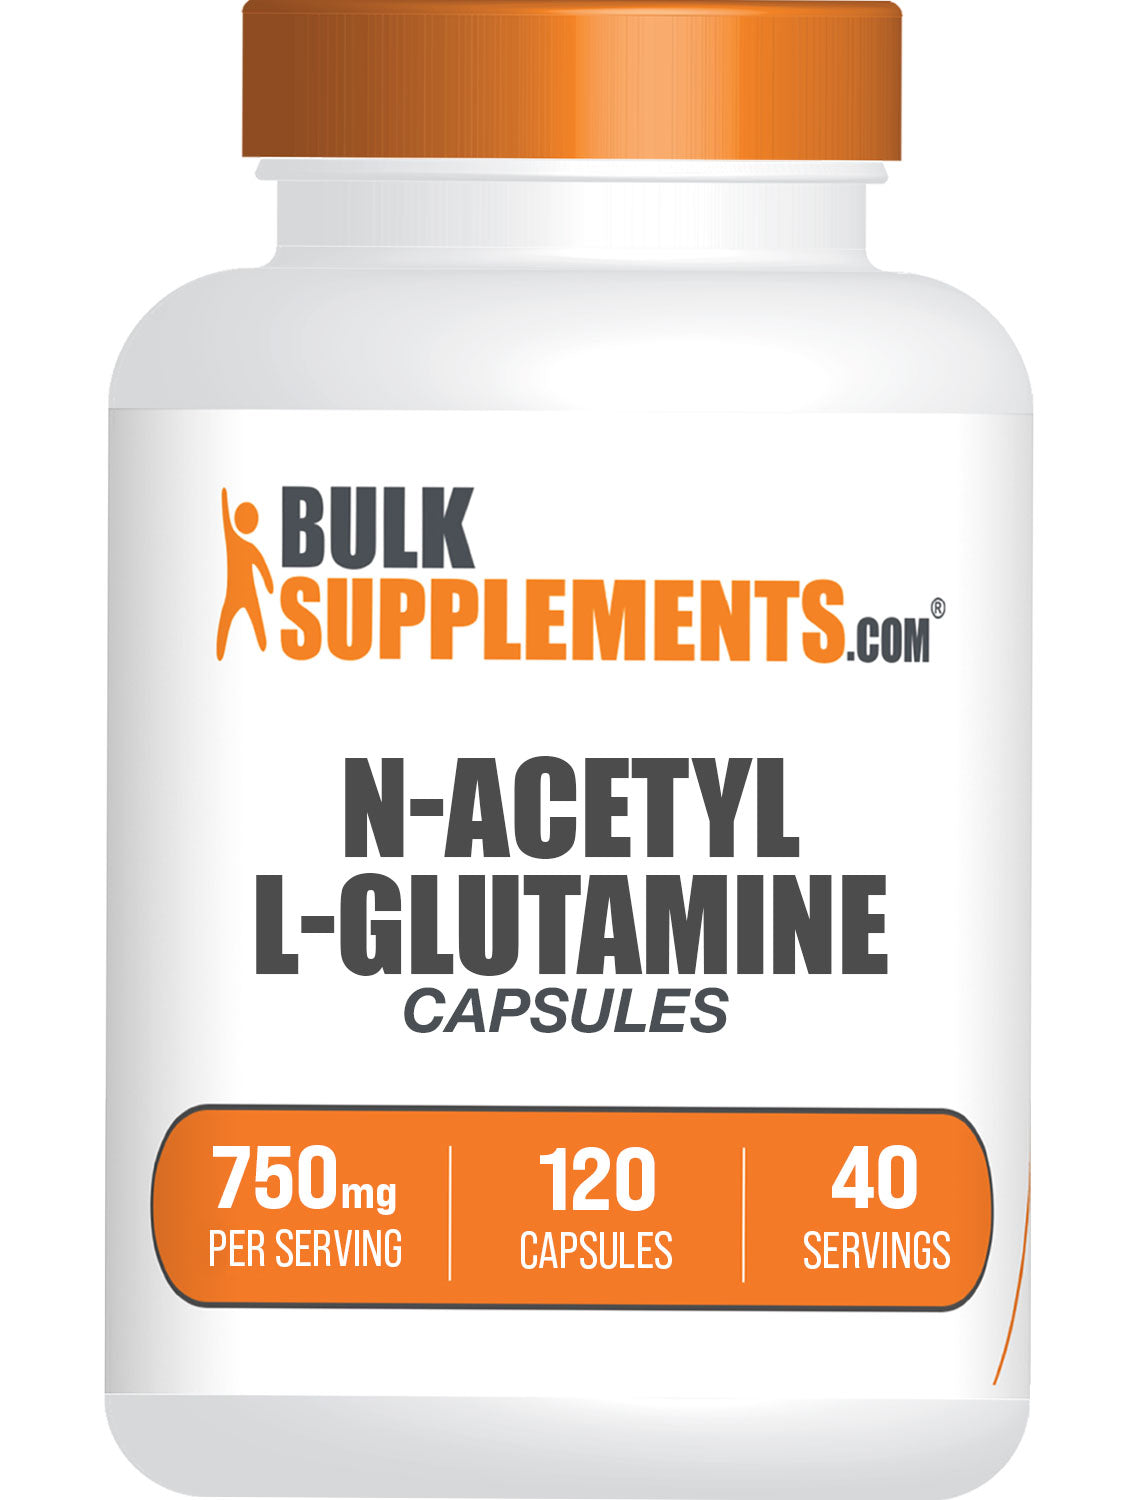 BulkSupplements.com N-Acetyl L-Glutamine 120 ct Capsules Bottle